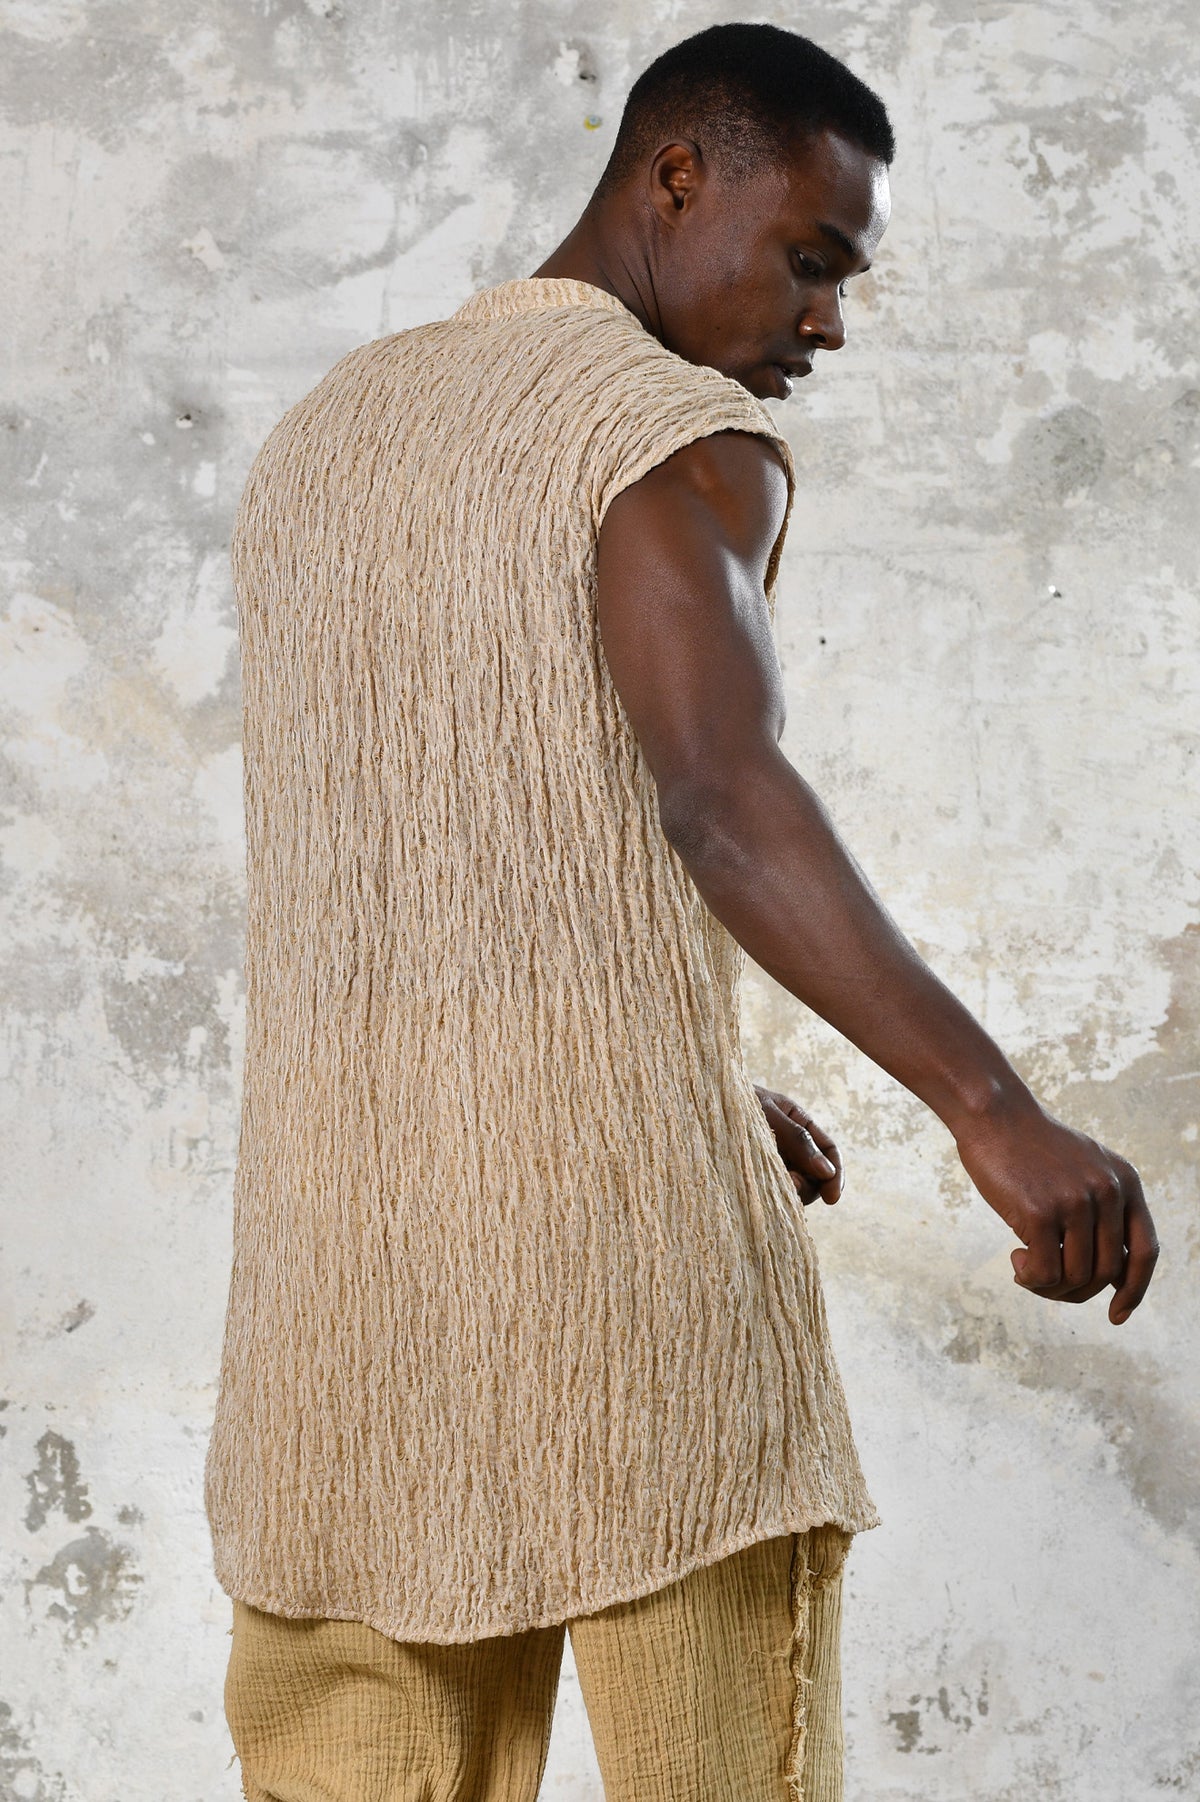 Bohemian Funky Men Sleeveless Shirt: Handwoven cotton luxury, raw texture, versatile bohemian style for all occasions. Burning Man festival Menswear. LONG SLEEVELESS VEST. Caravana men Gift for him boho